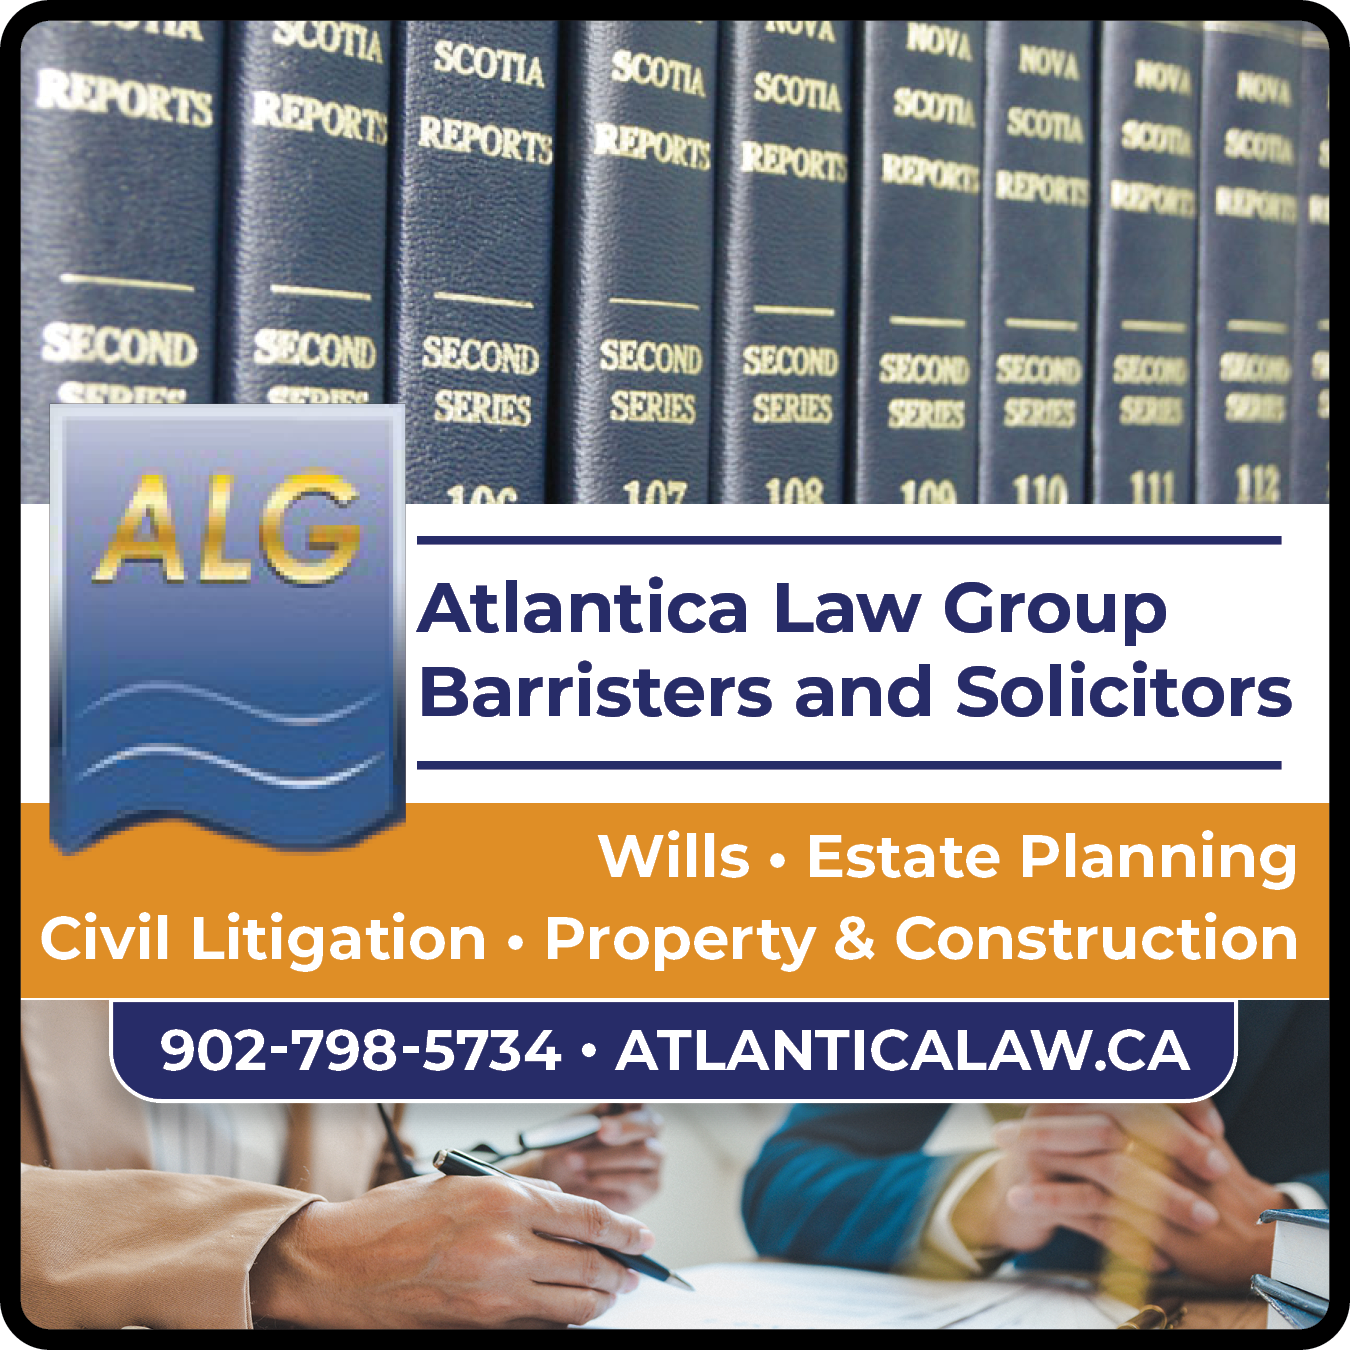 Atlantica Law Group